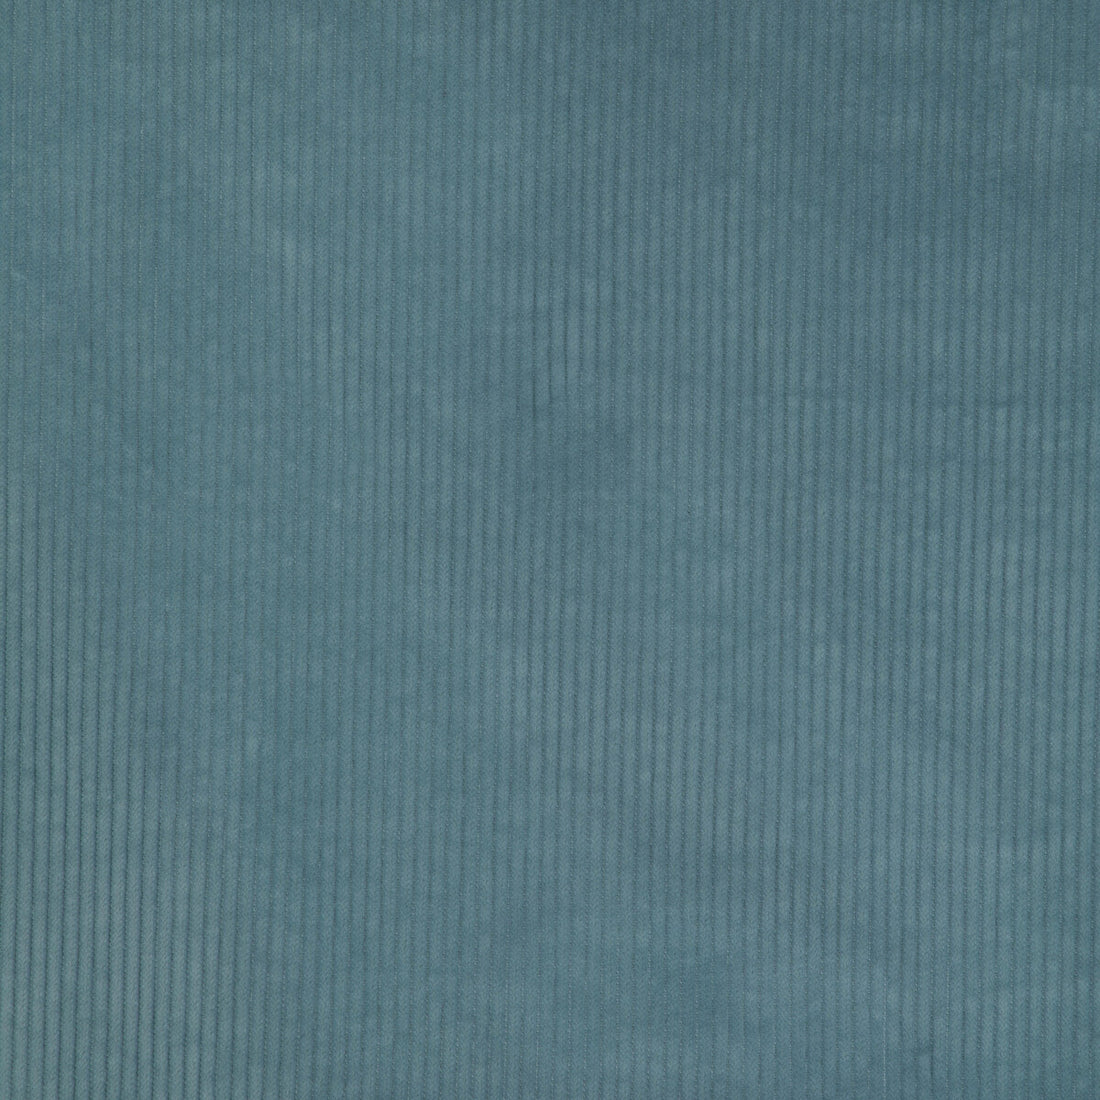 Kravet Smart fabric in 37006-115 color - pattern 37006.115.0 - by Kravet Smart